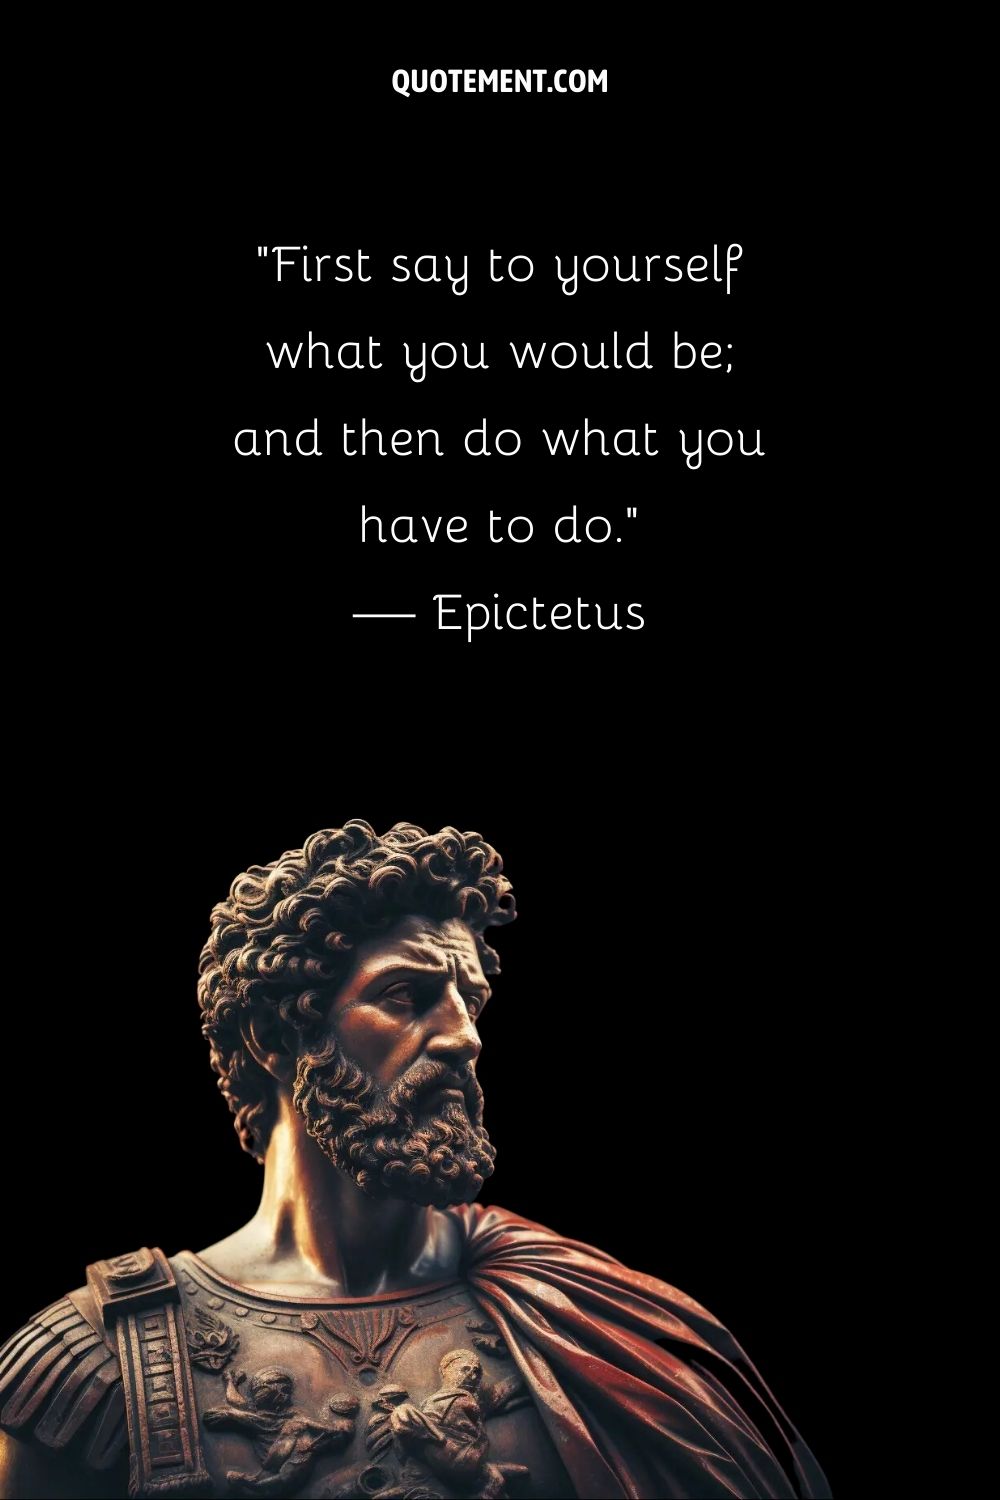 Epictetus' wisdom harmonized in sculpted, enduring marble.